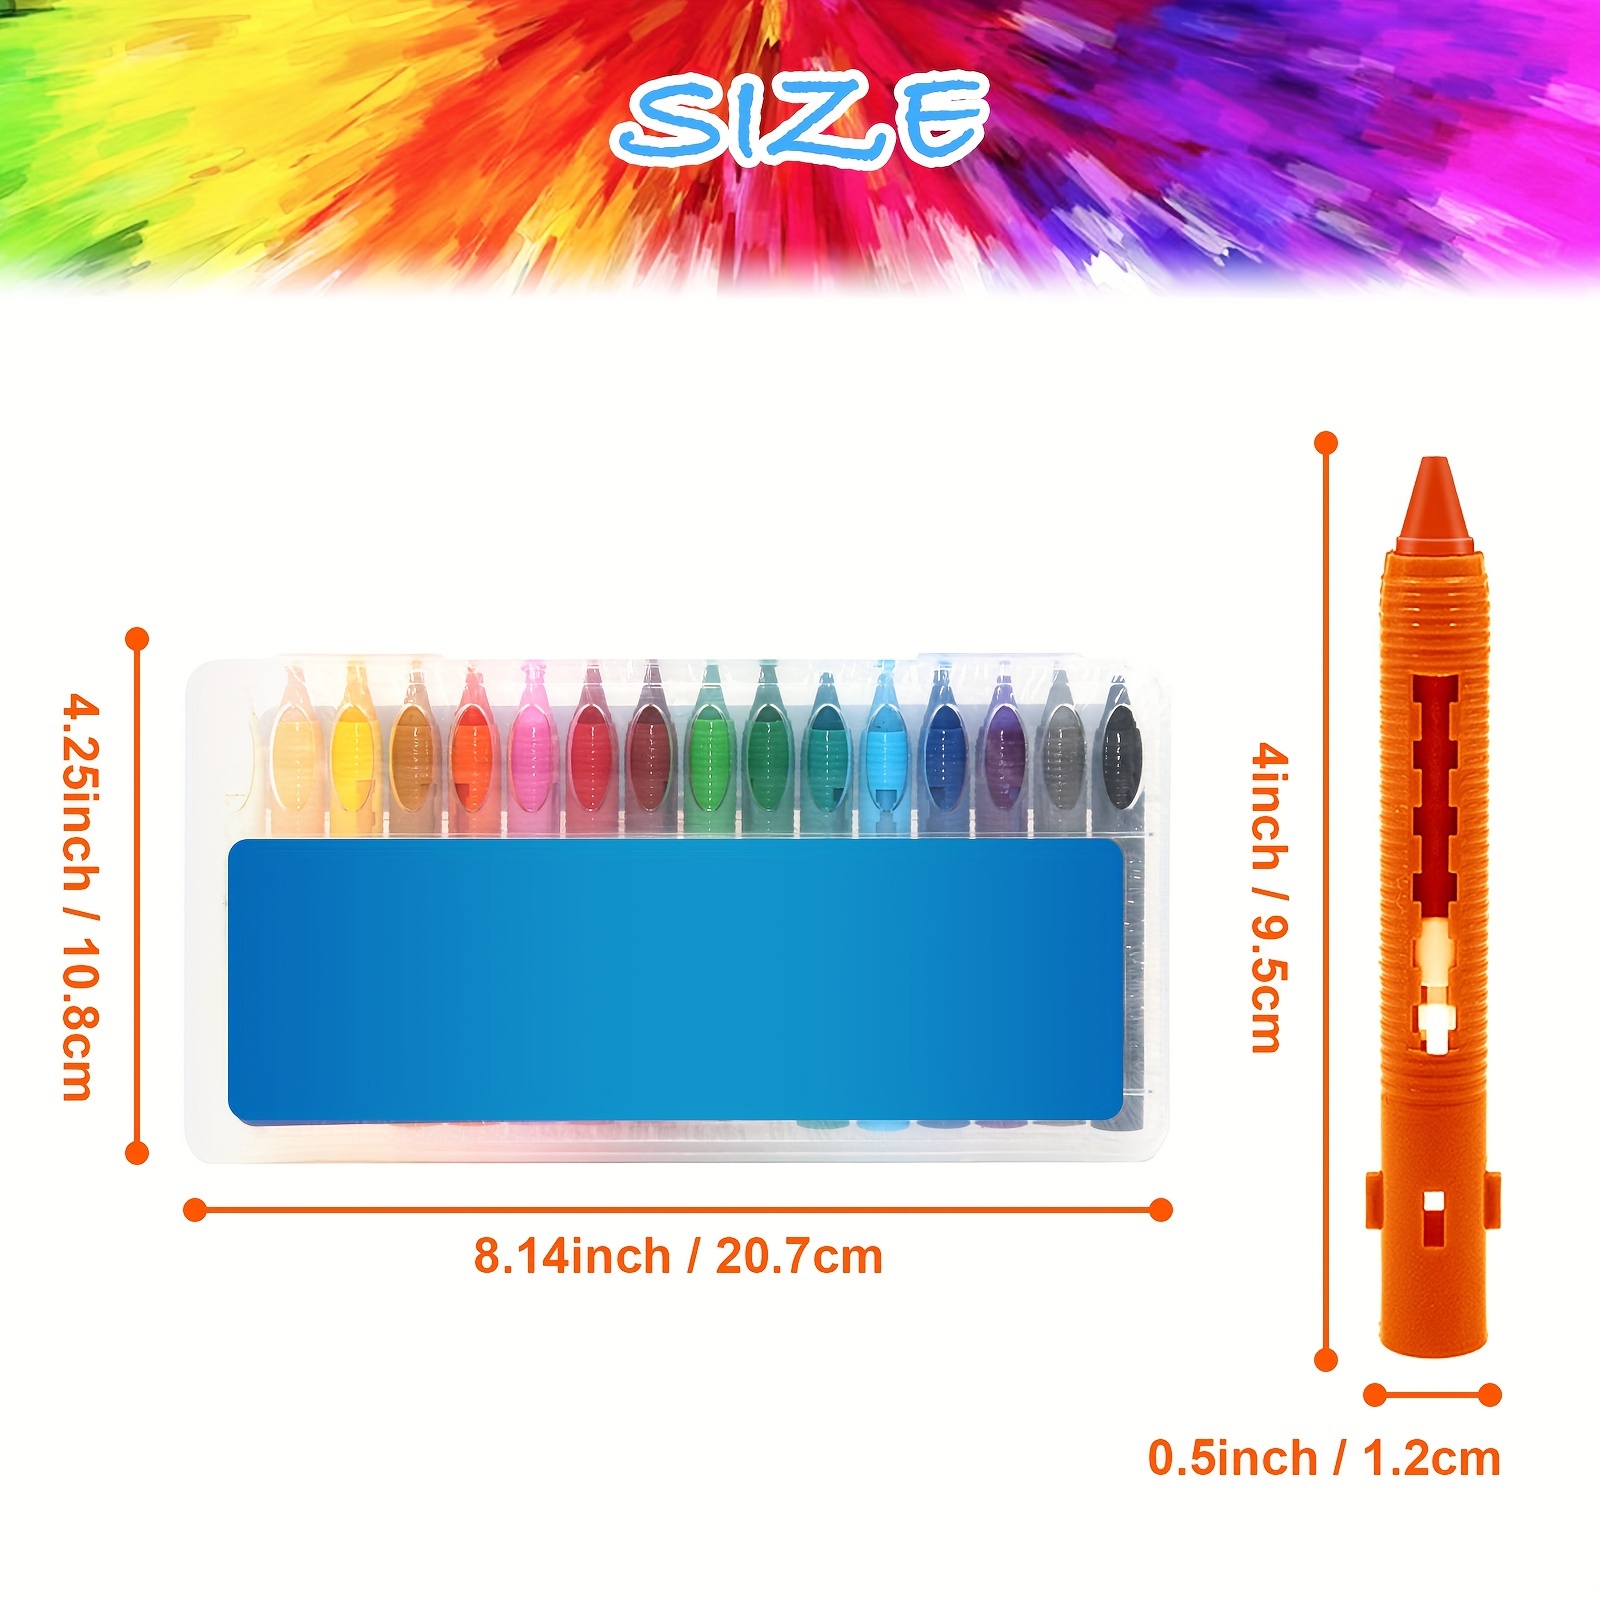 Save on Crayola Bathtub Crayons Order Online Delivery